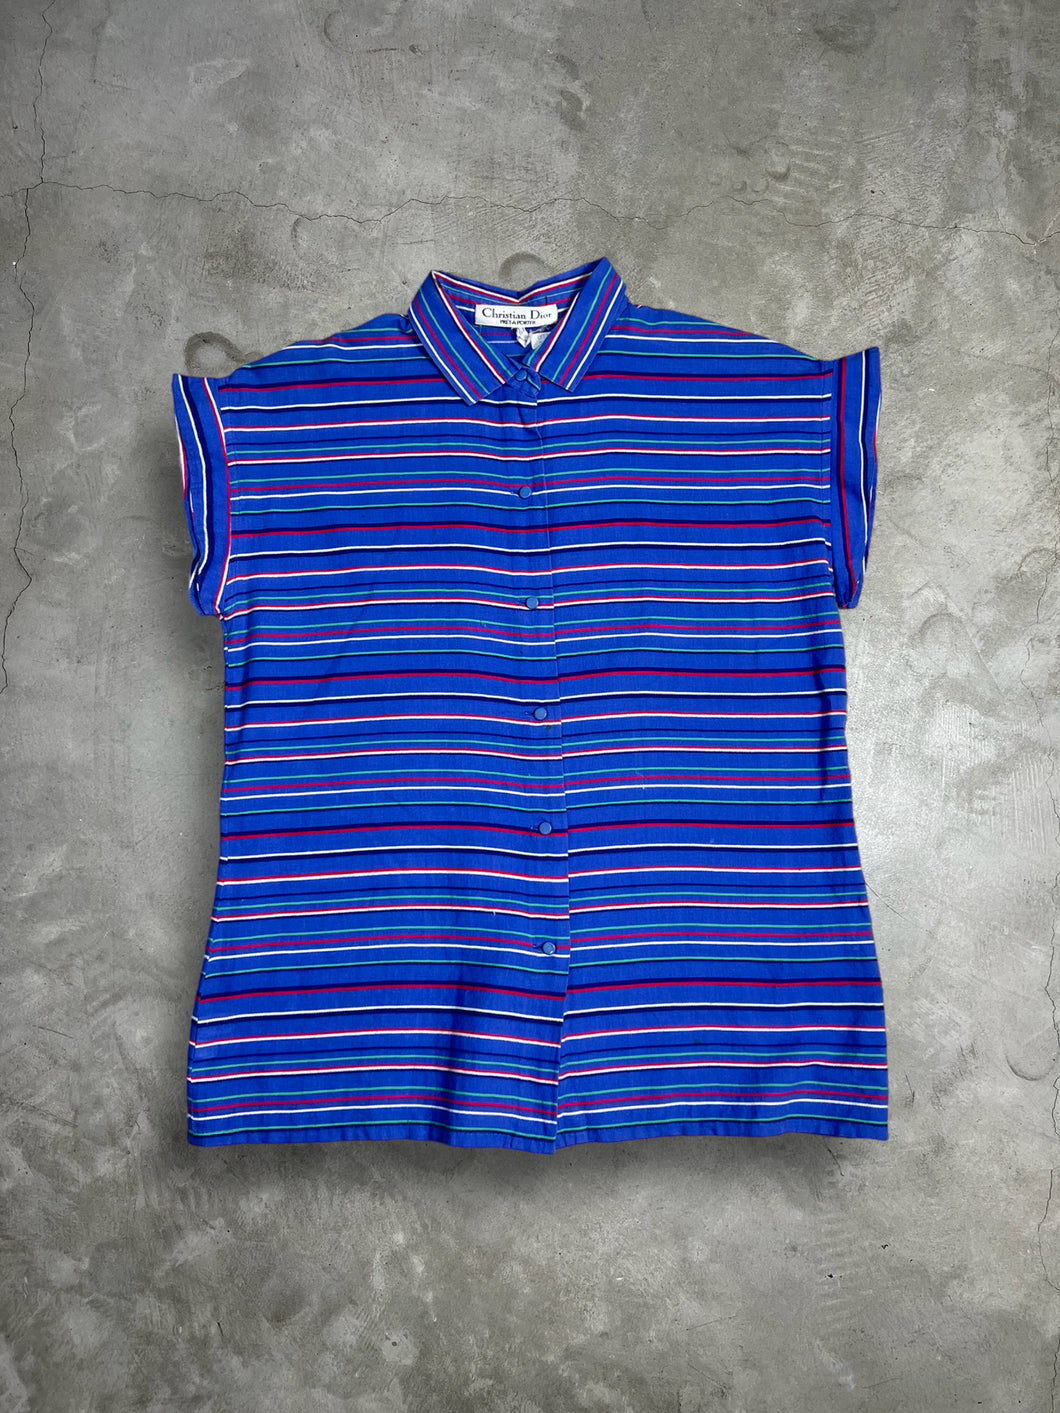 Vintage Christian Dior Sleeveless Striped Shirt (L) GTMPT592